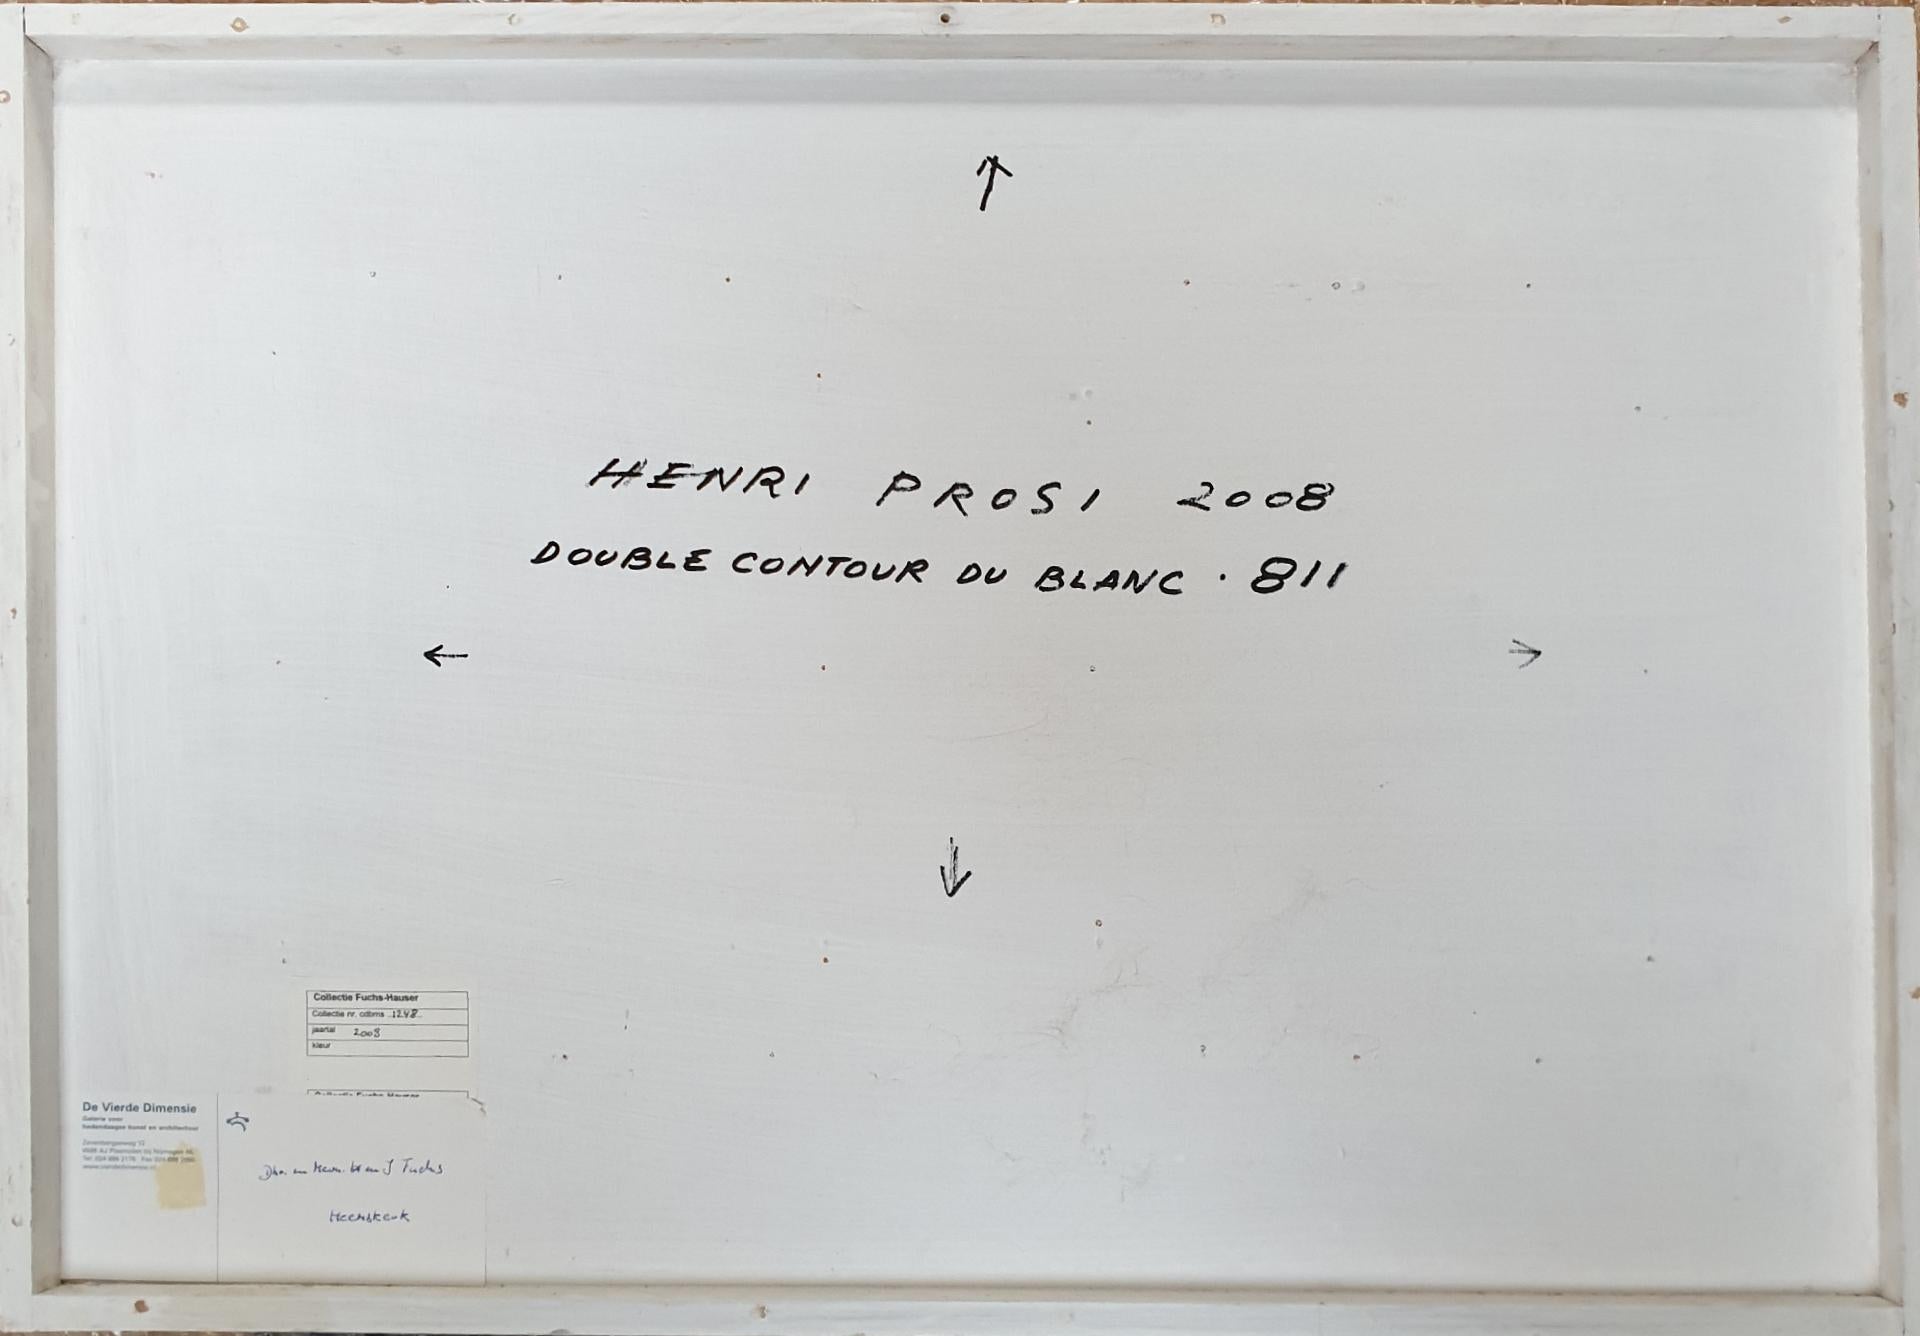 Double Contour du Blanc - contemporary modern Henri Prosi painting relief For Sale 4